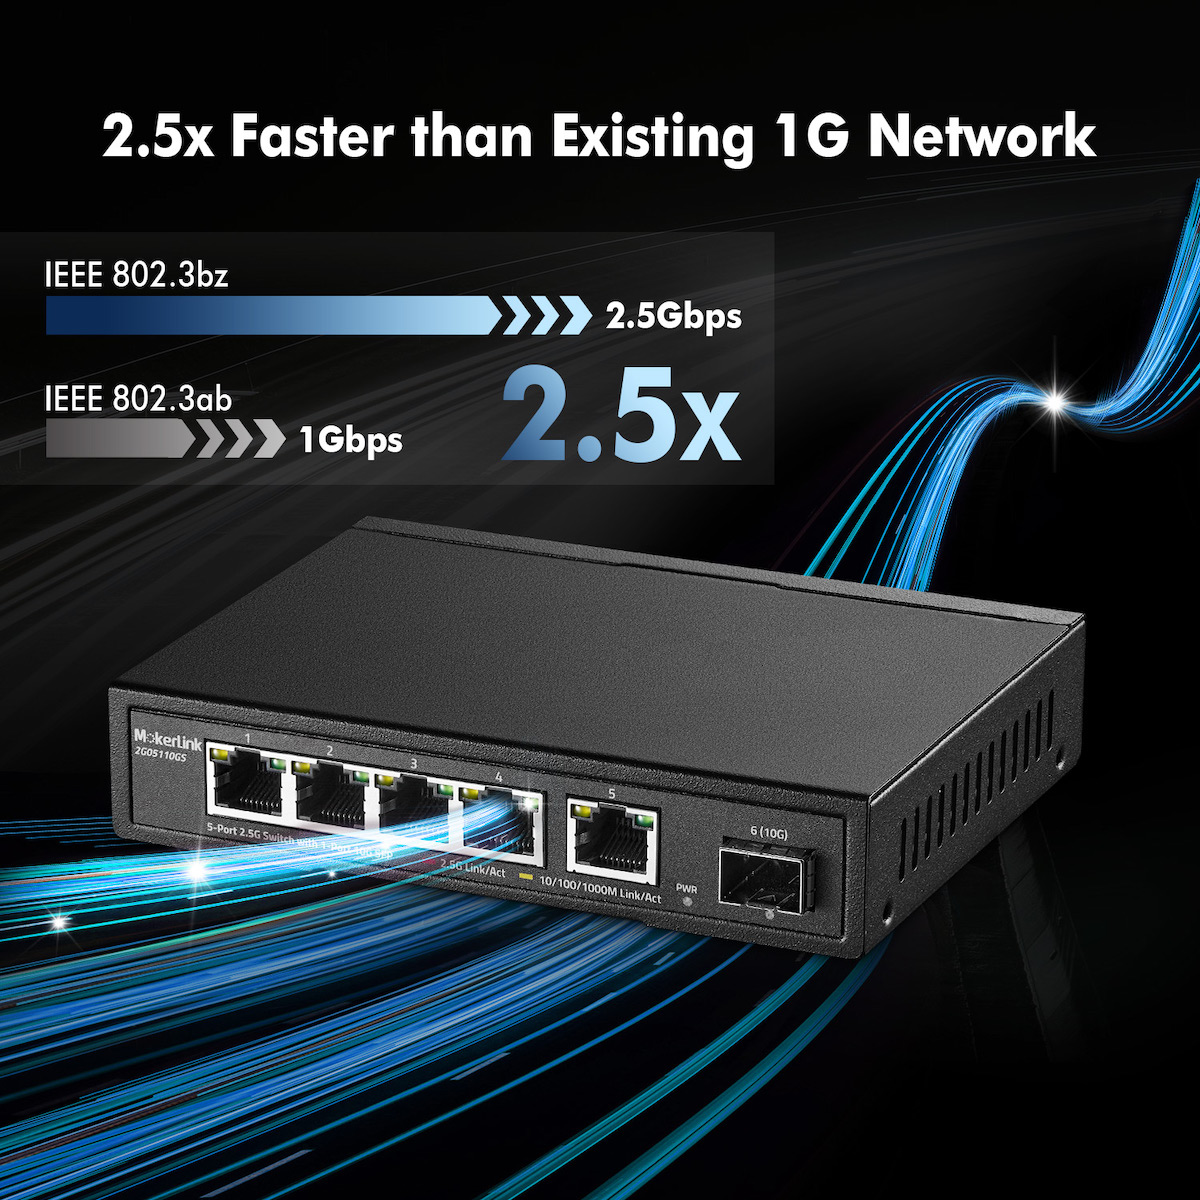 LGB5052A, Managed Gigabit Ethernet Switch with 10GbE uplinks